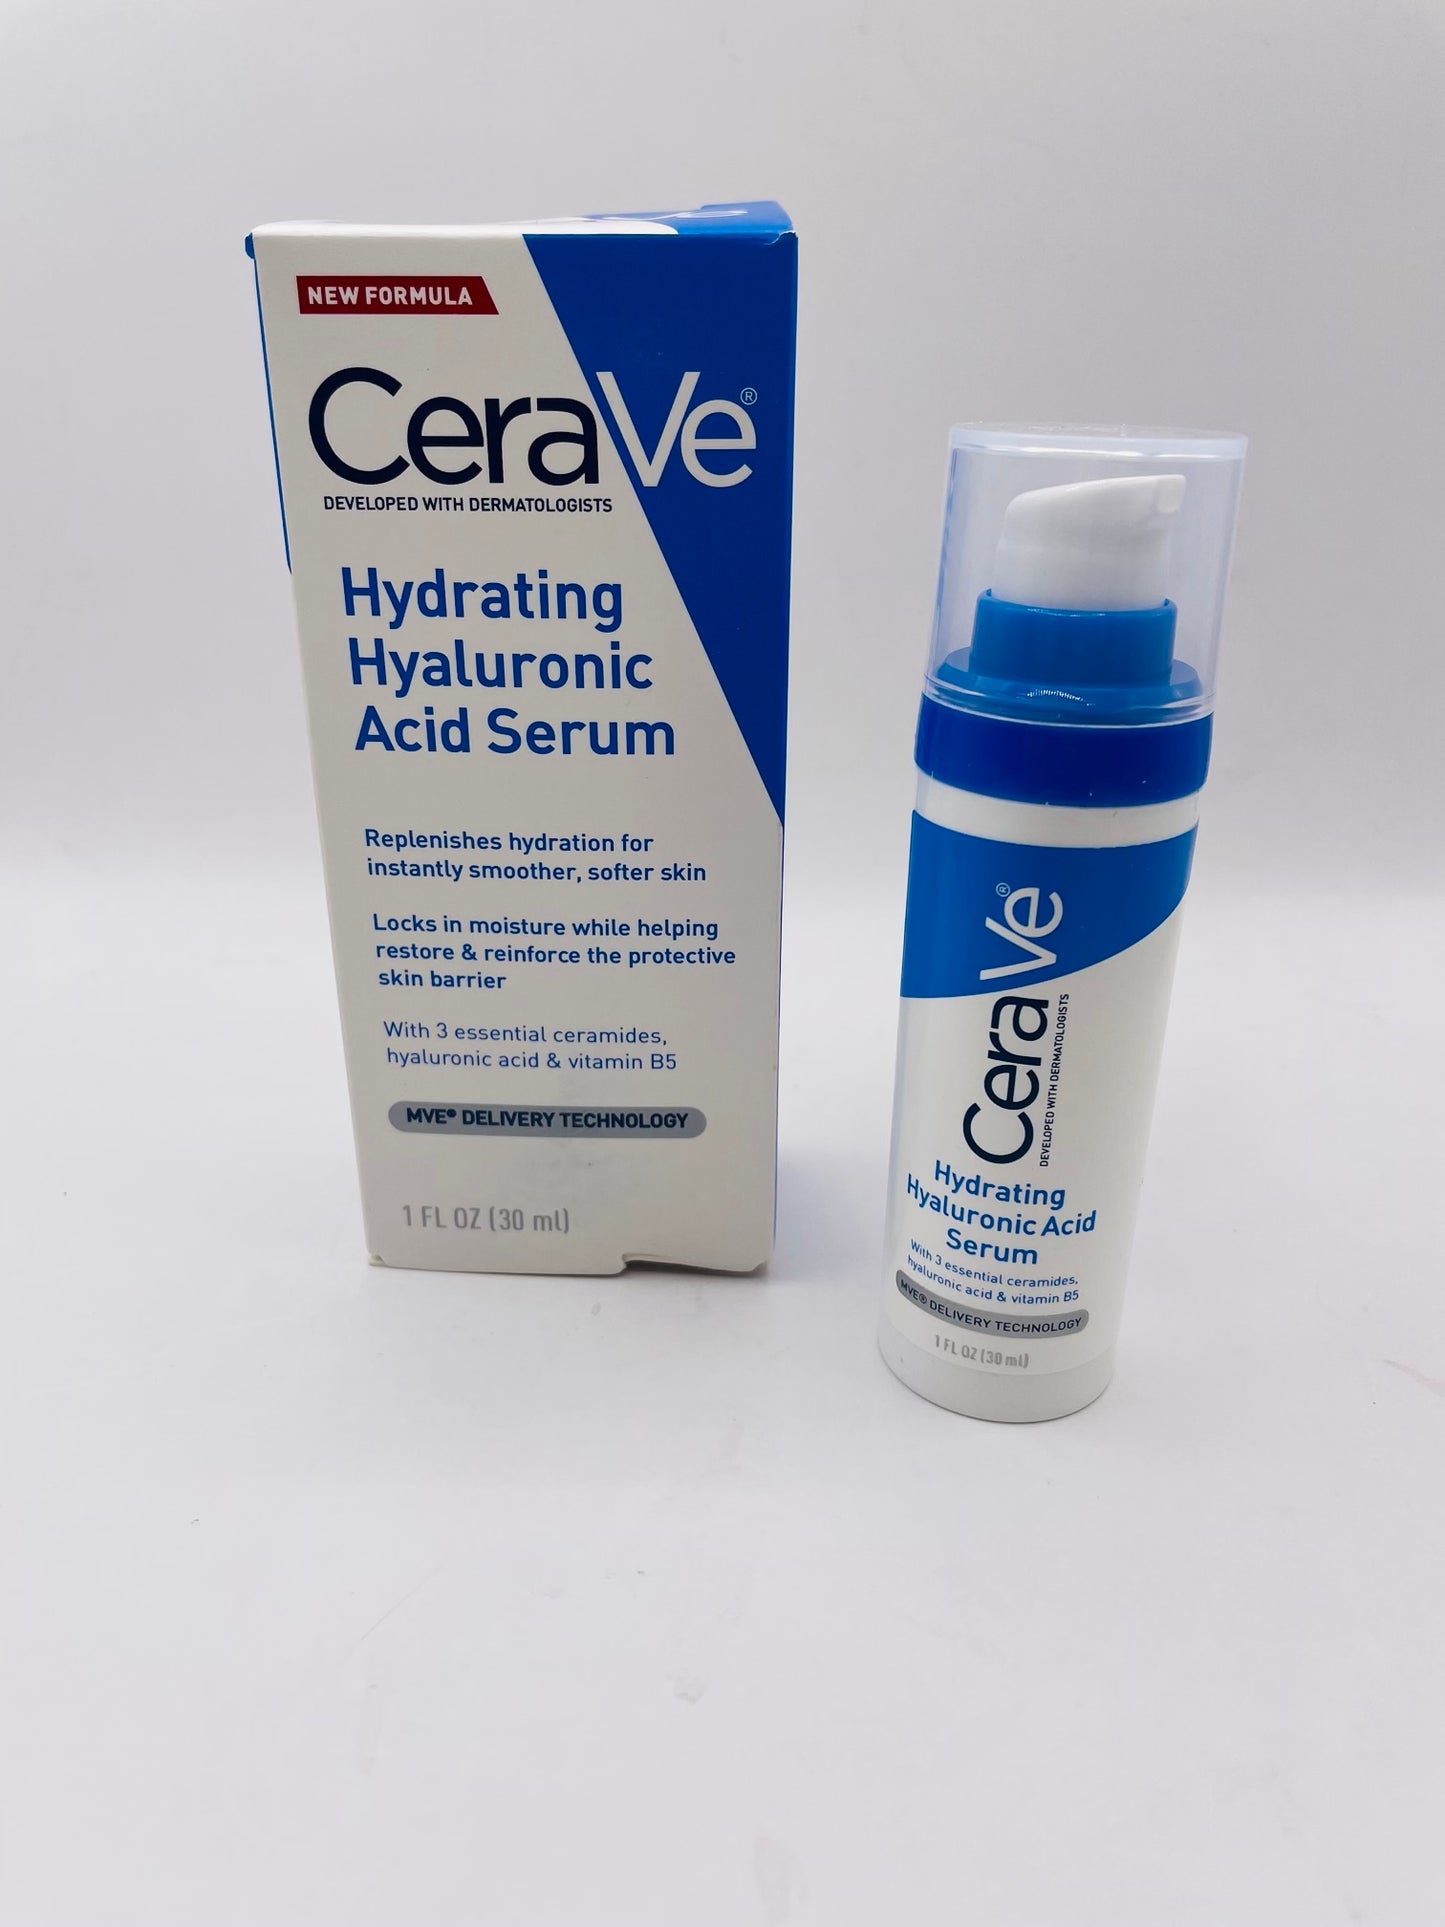 Cerave Hyloronic acid serum